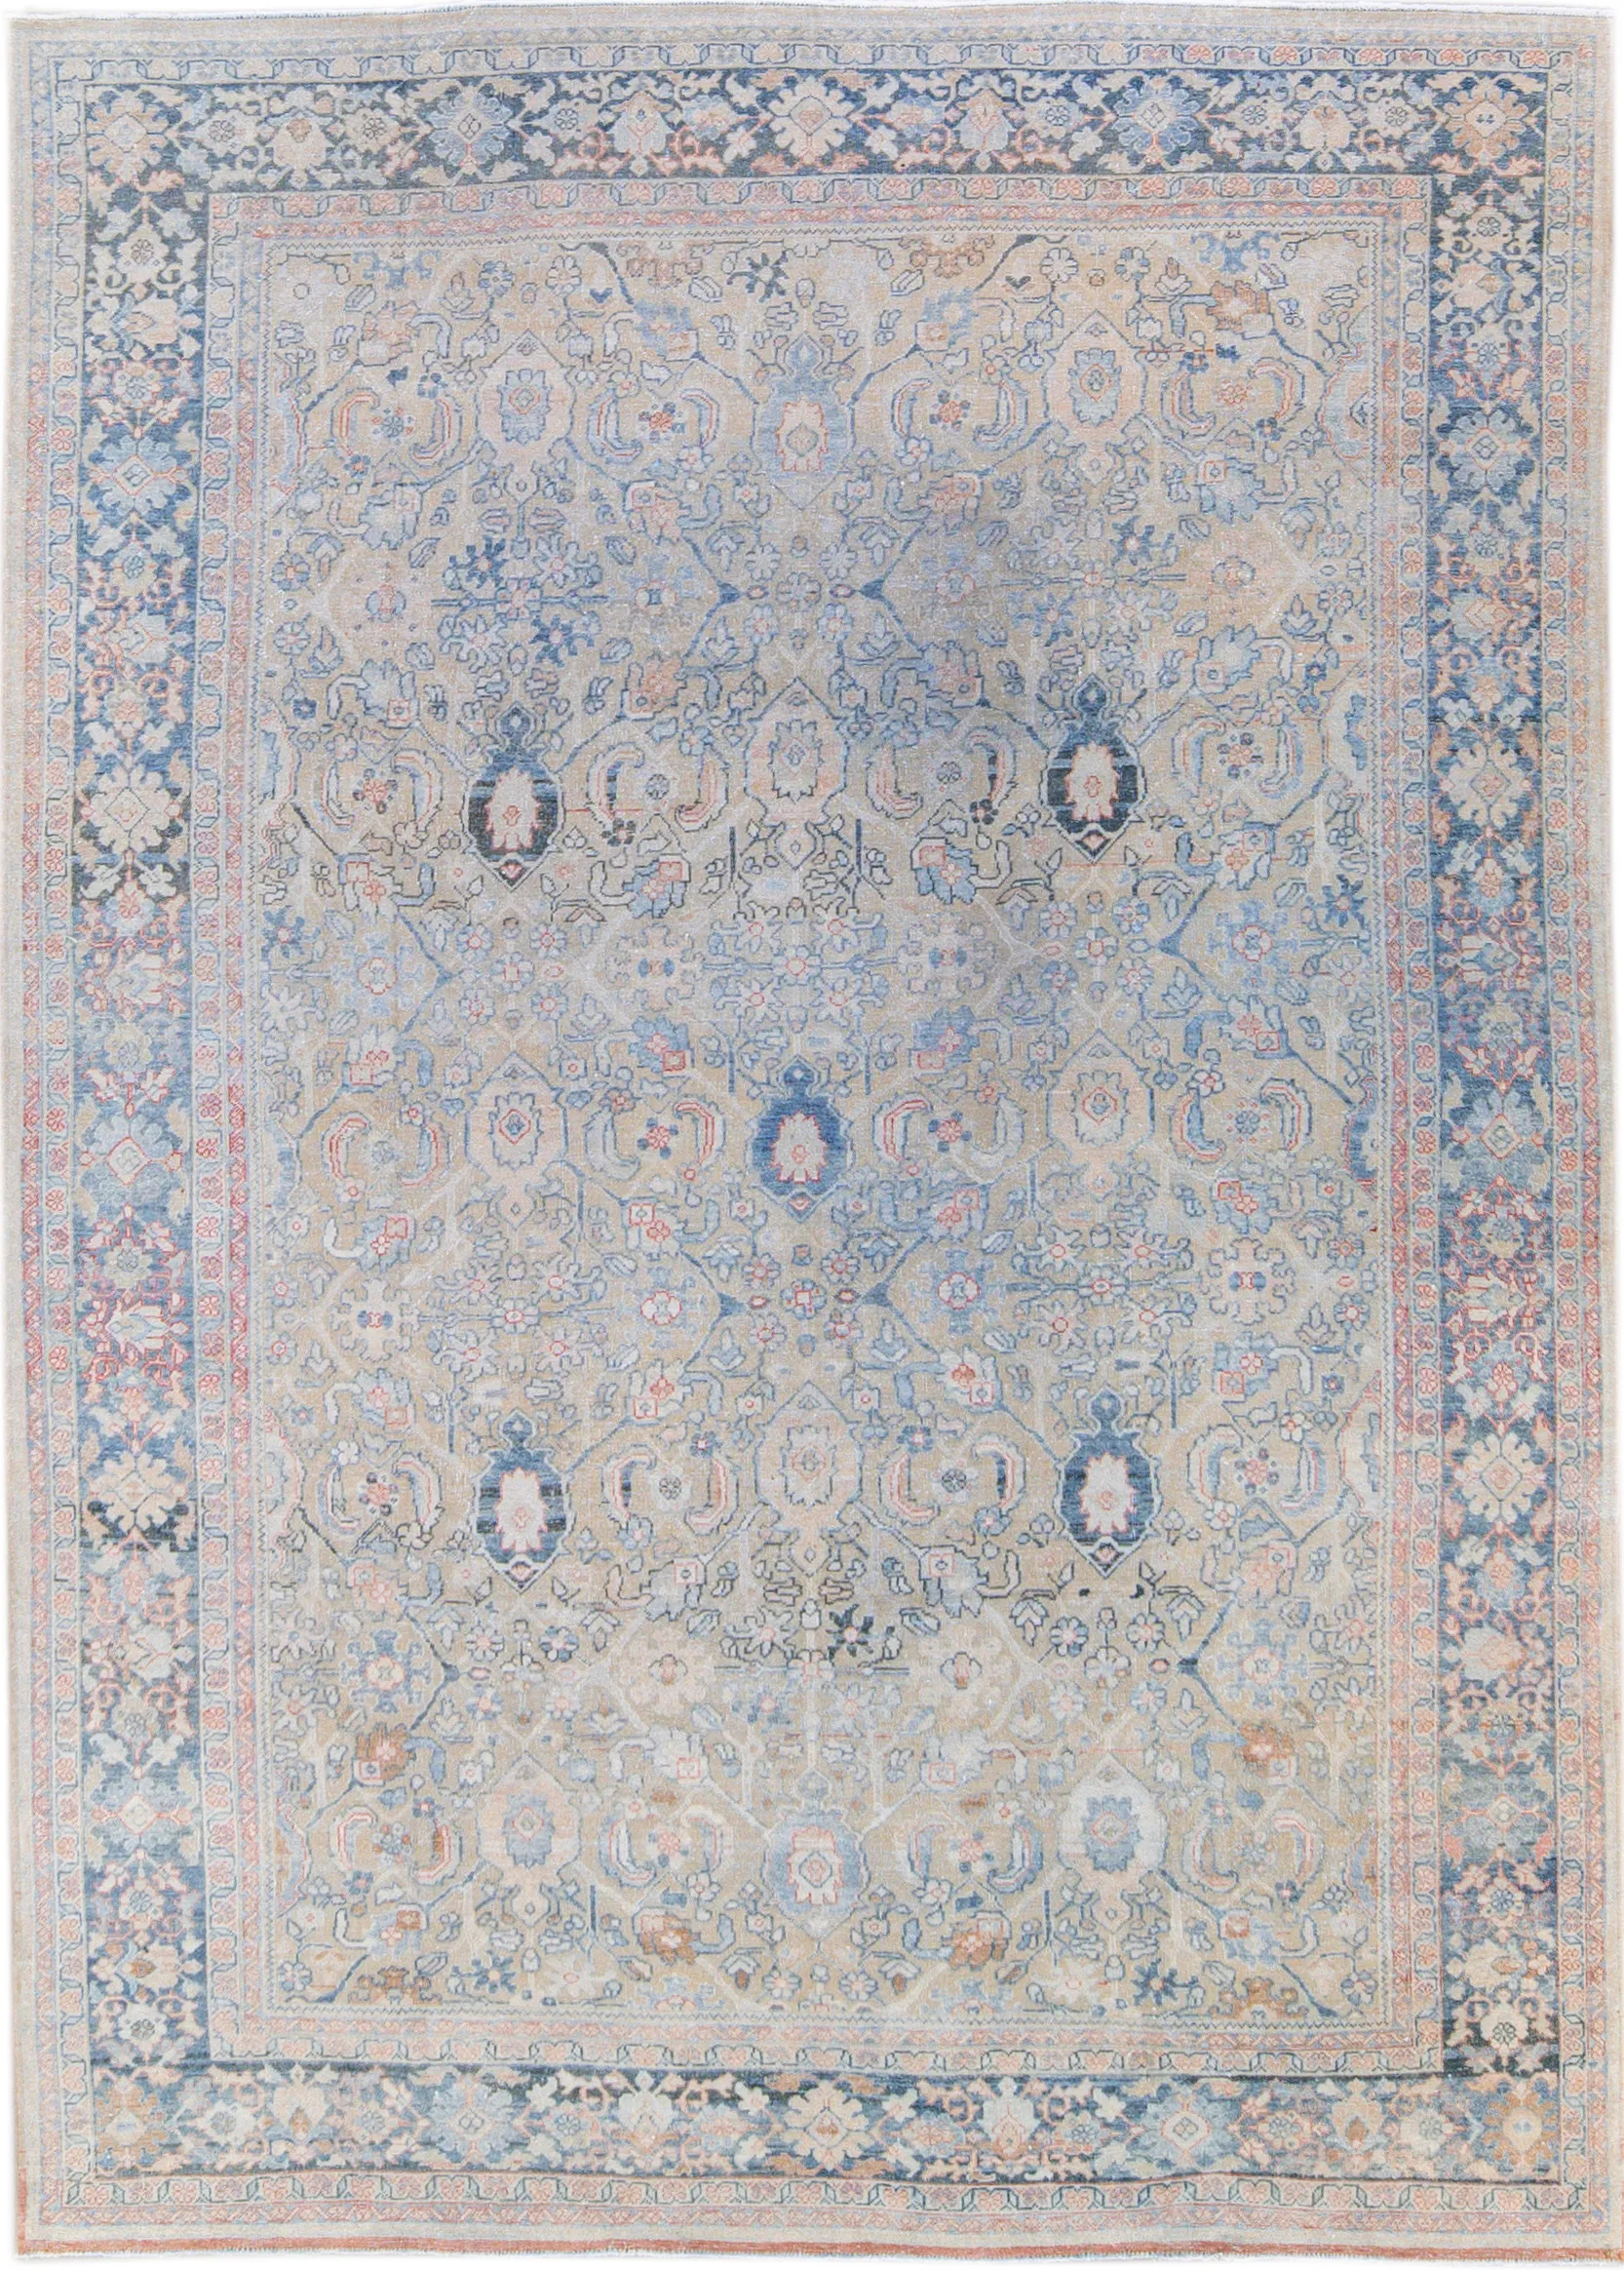 Antique Persian Mahal Rug 9'1" x 12' 5" - Apadana - Blue - Blue